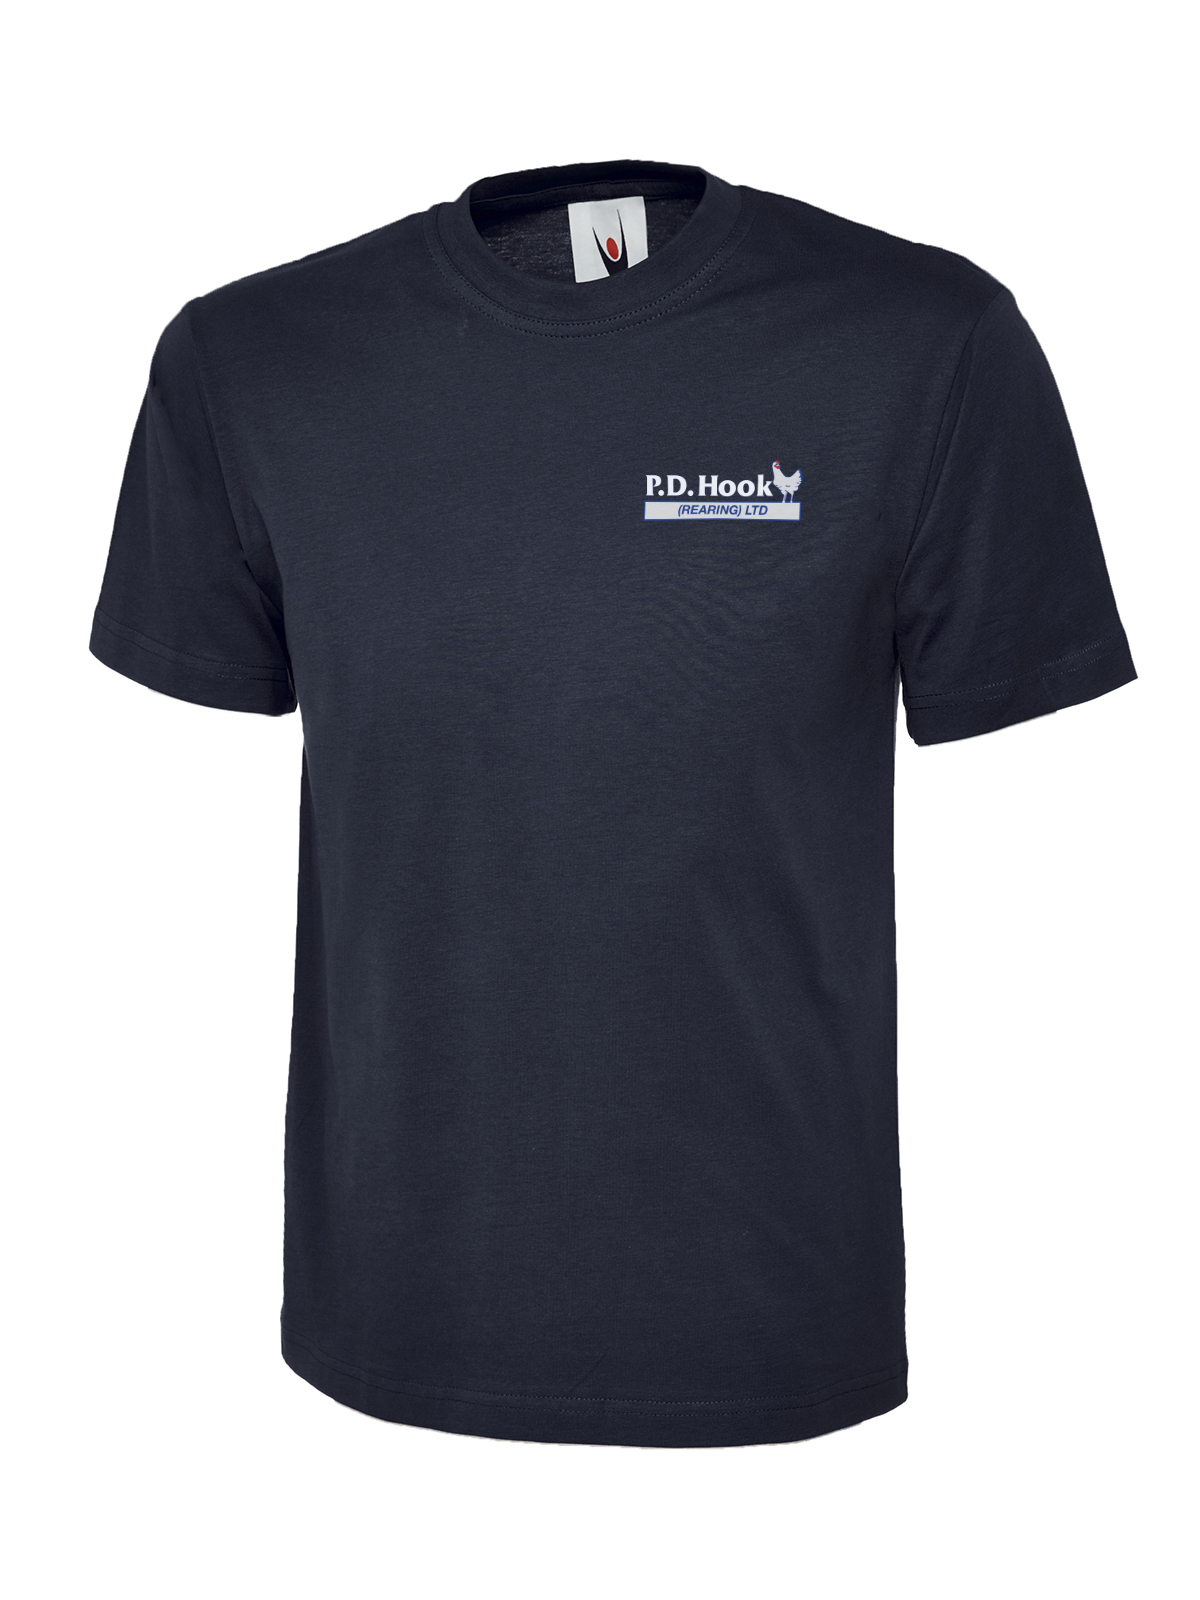 P D Hook (Rearing) Ltd - T-Shirt, Navy - Size 5XL